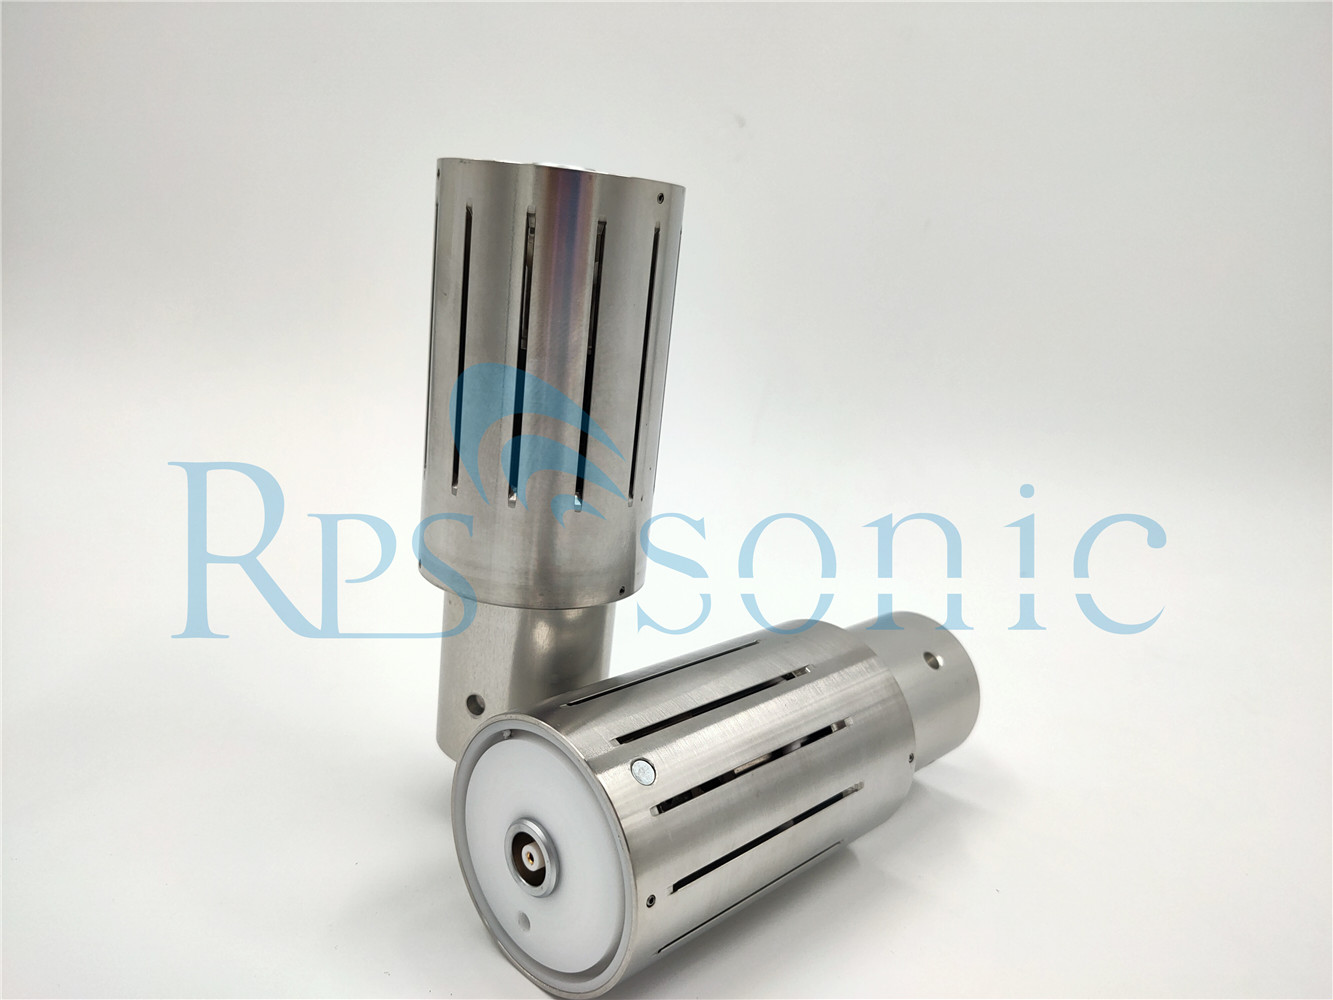 Rinco C20-12 Ultrasonic welding converter with open house 